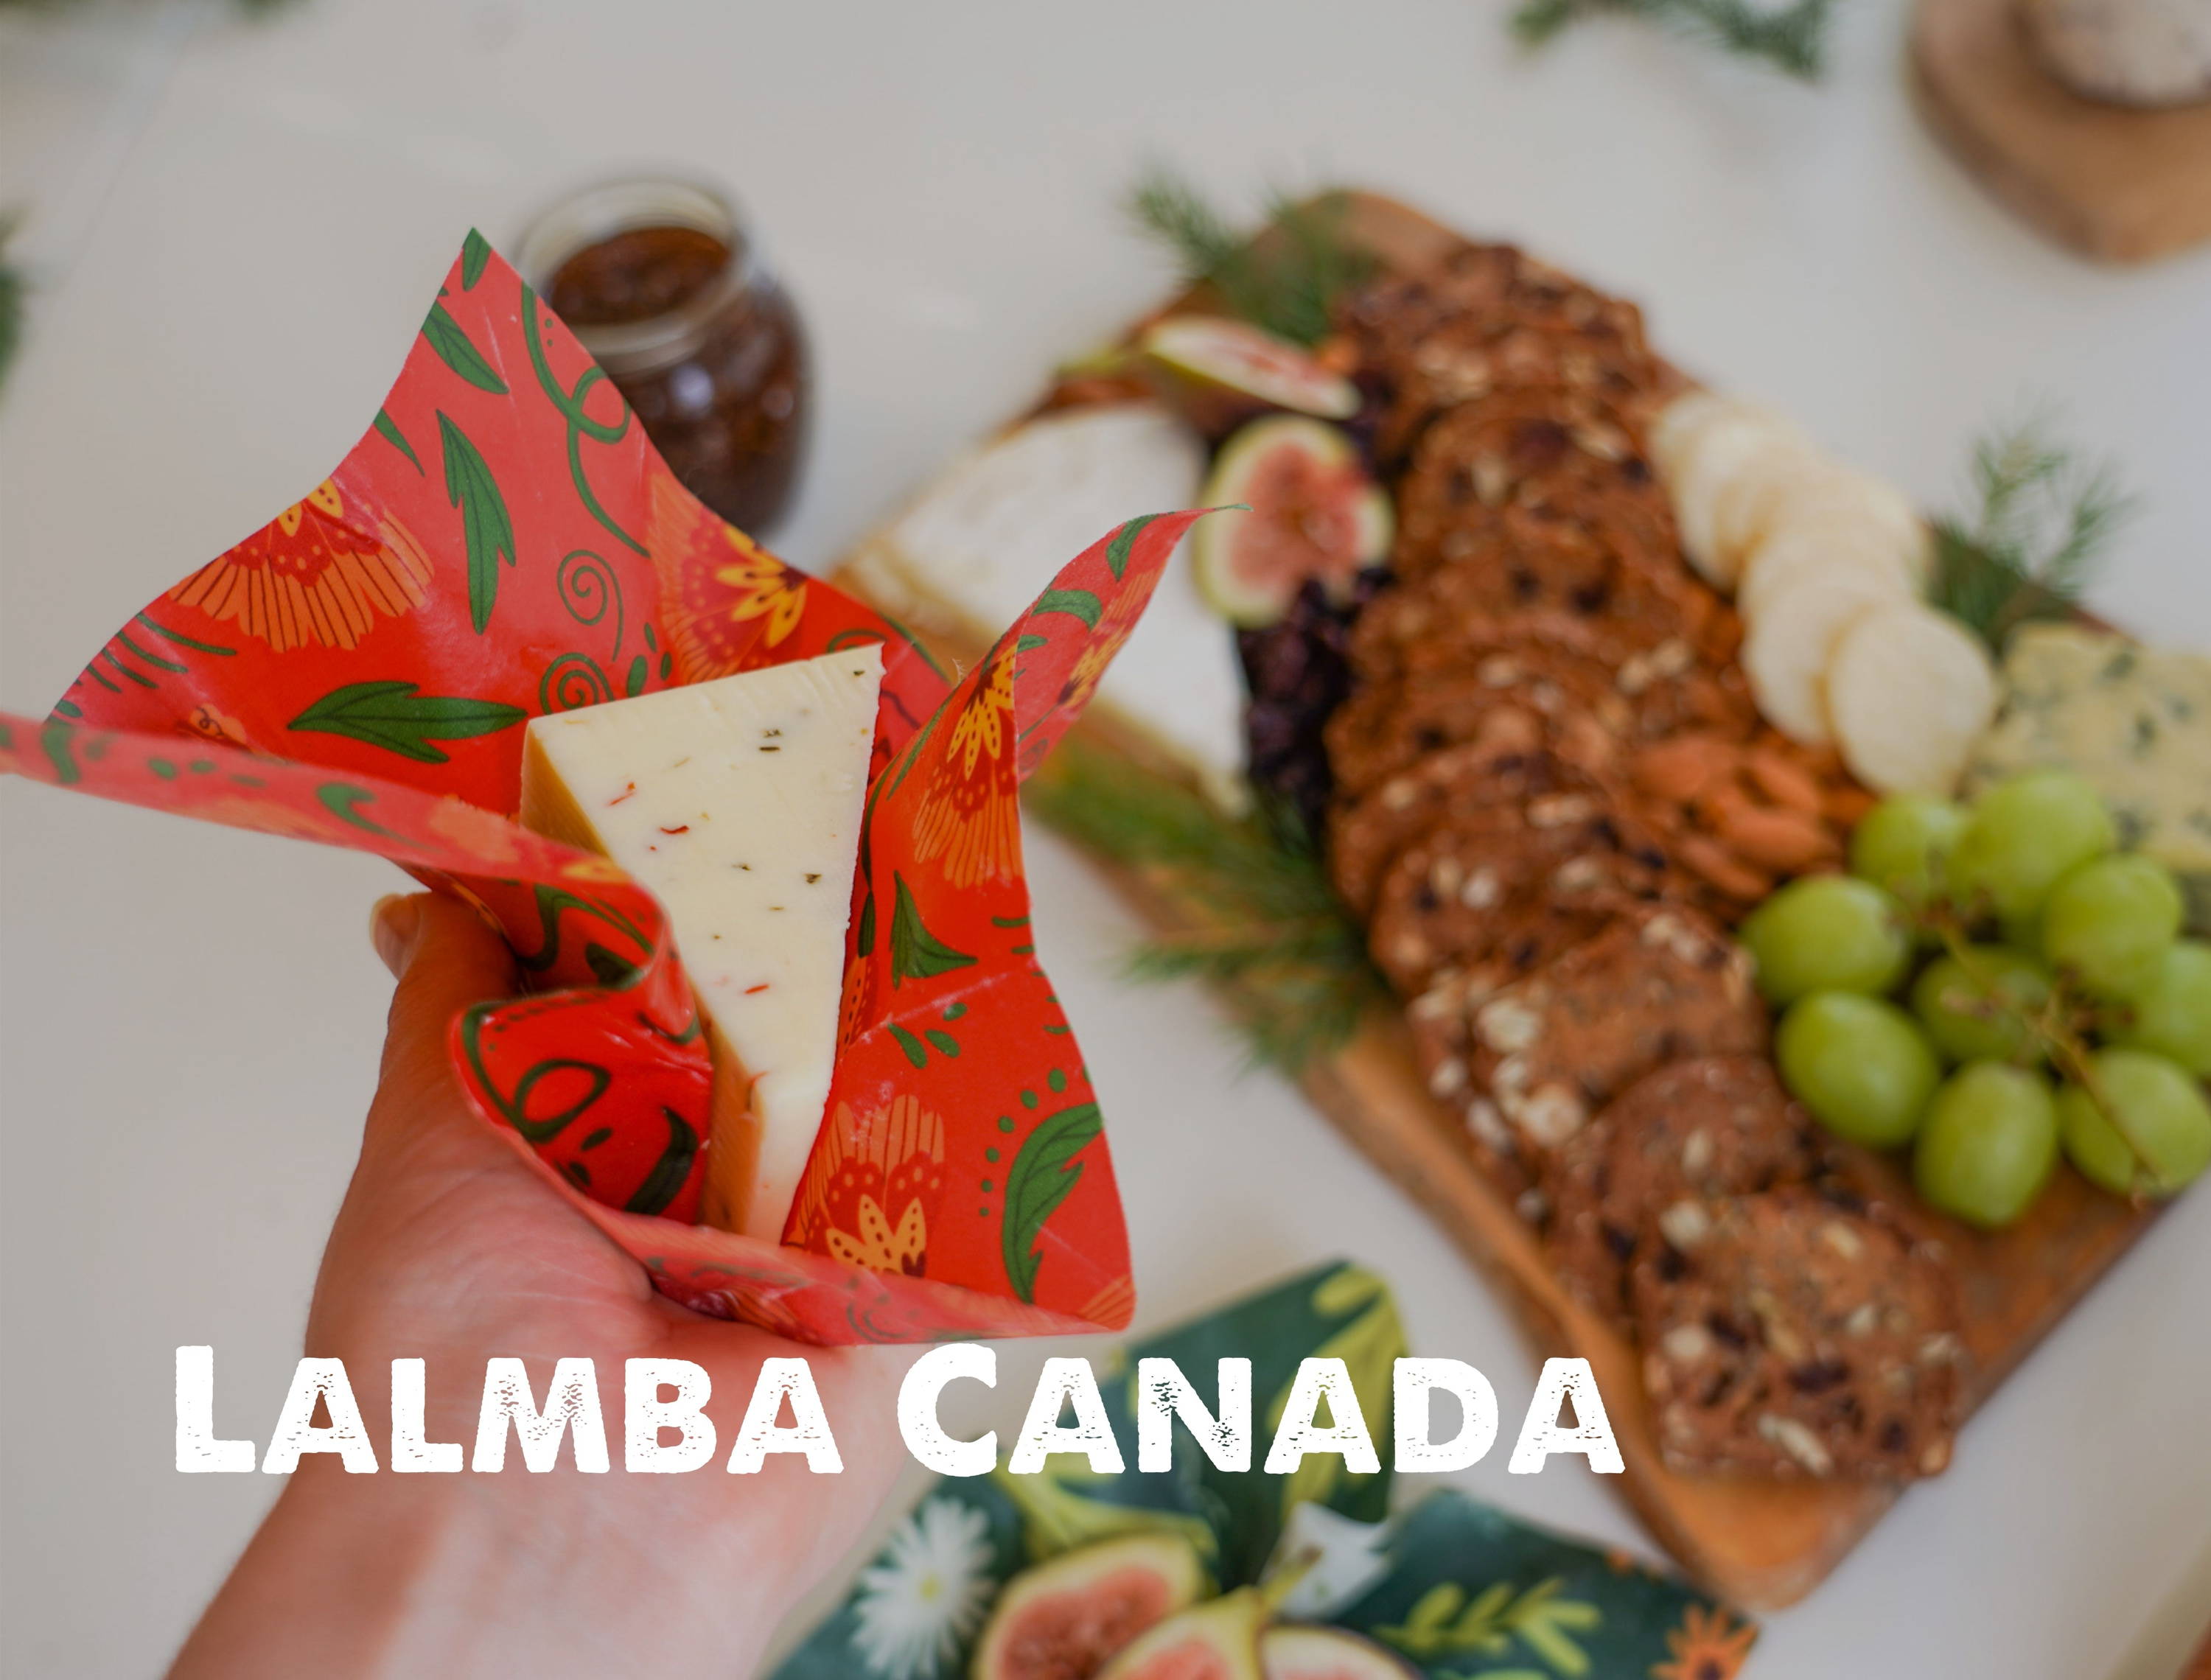 Lalmba Canada and Nature Bee custom wraps